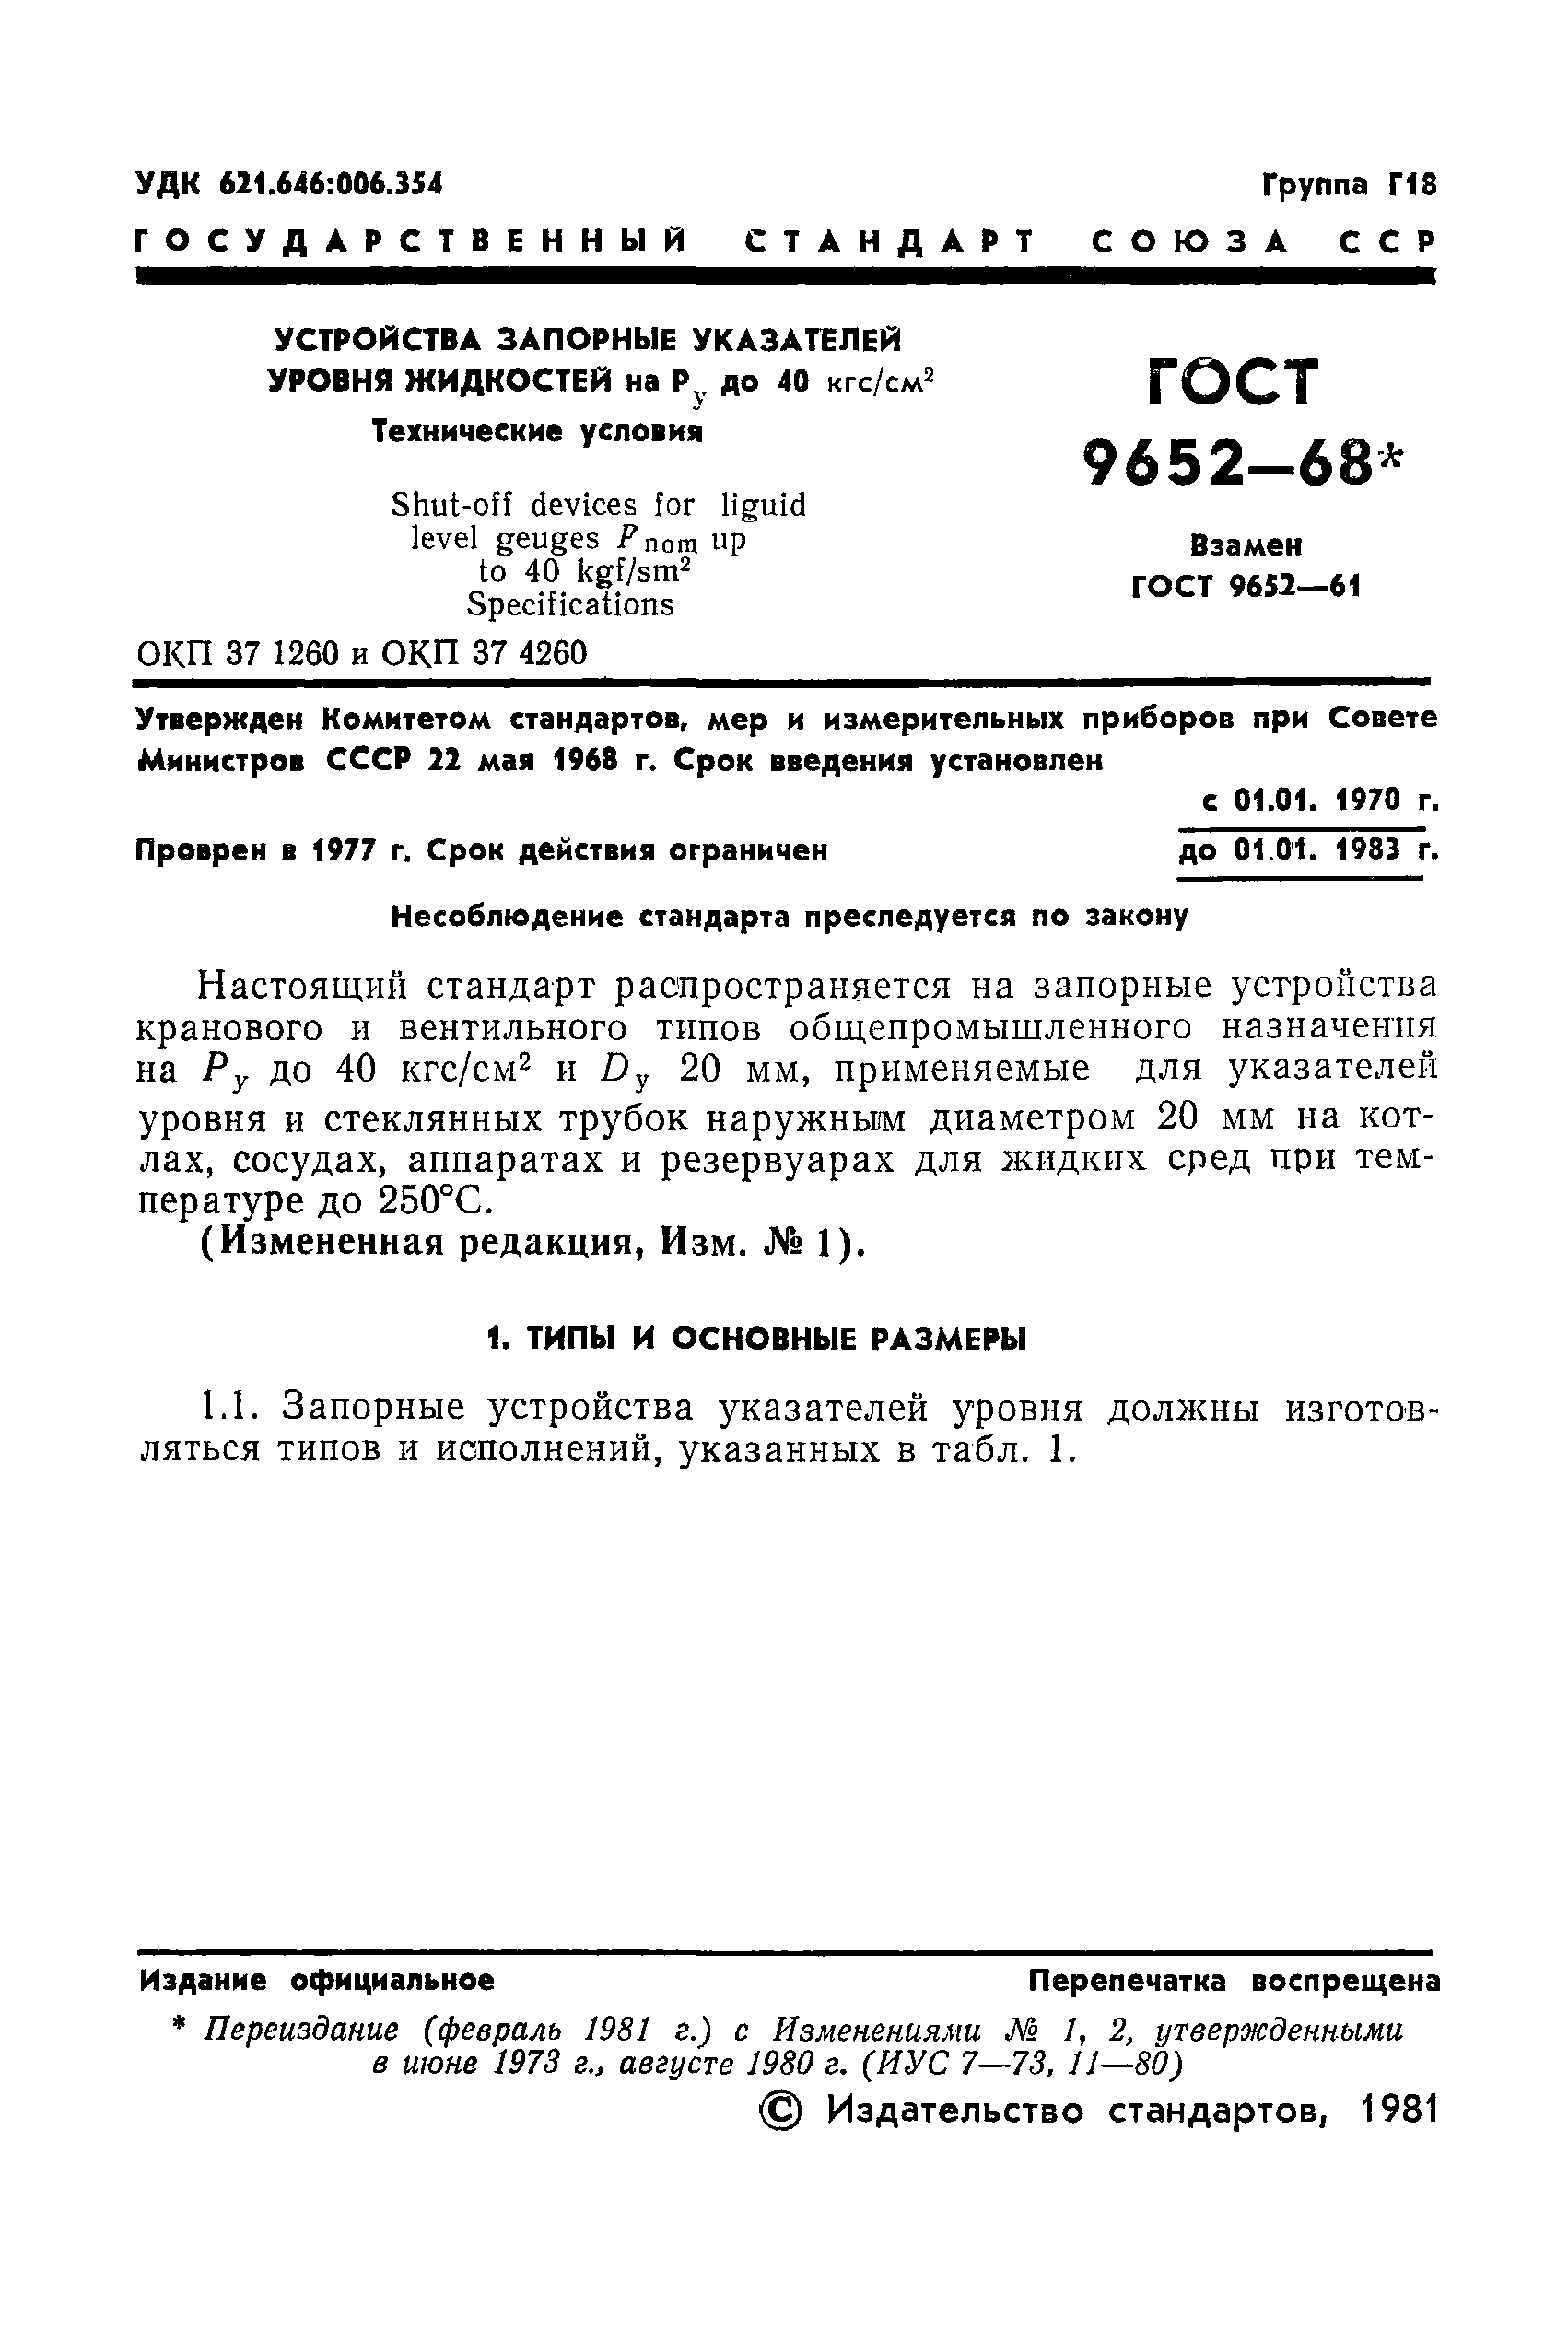 ГОСТ 9652-68